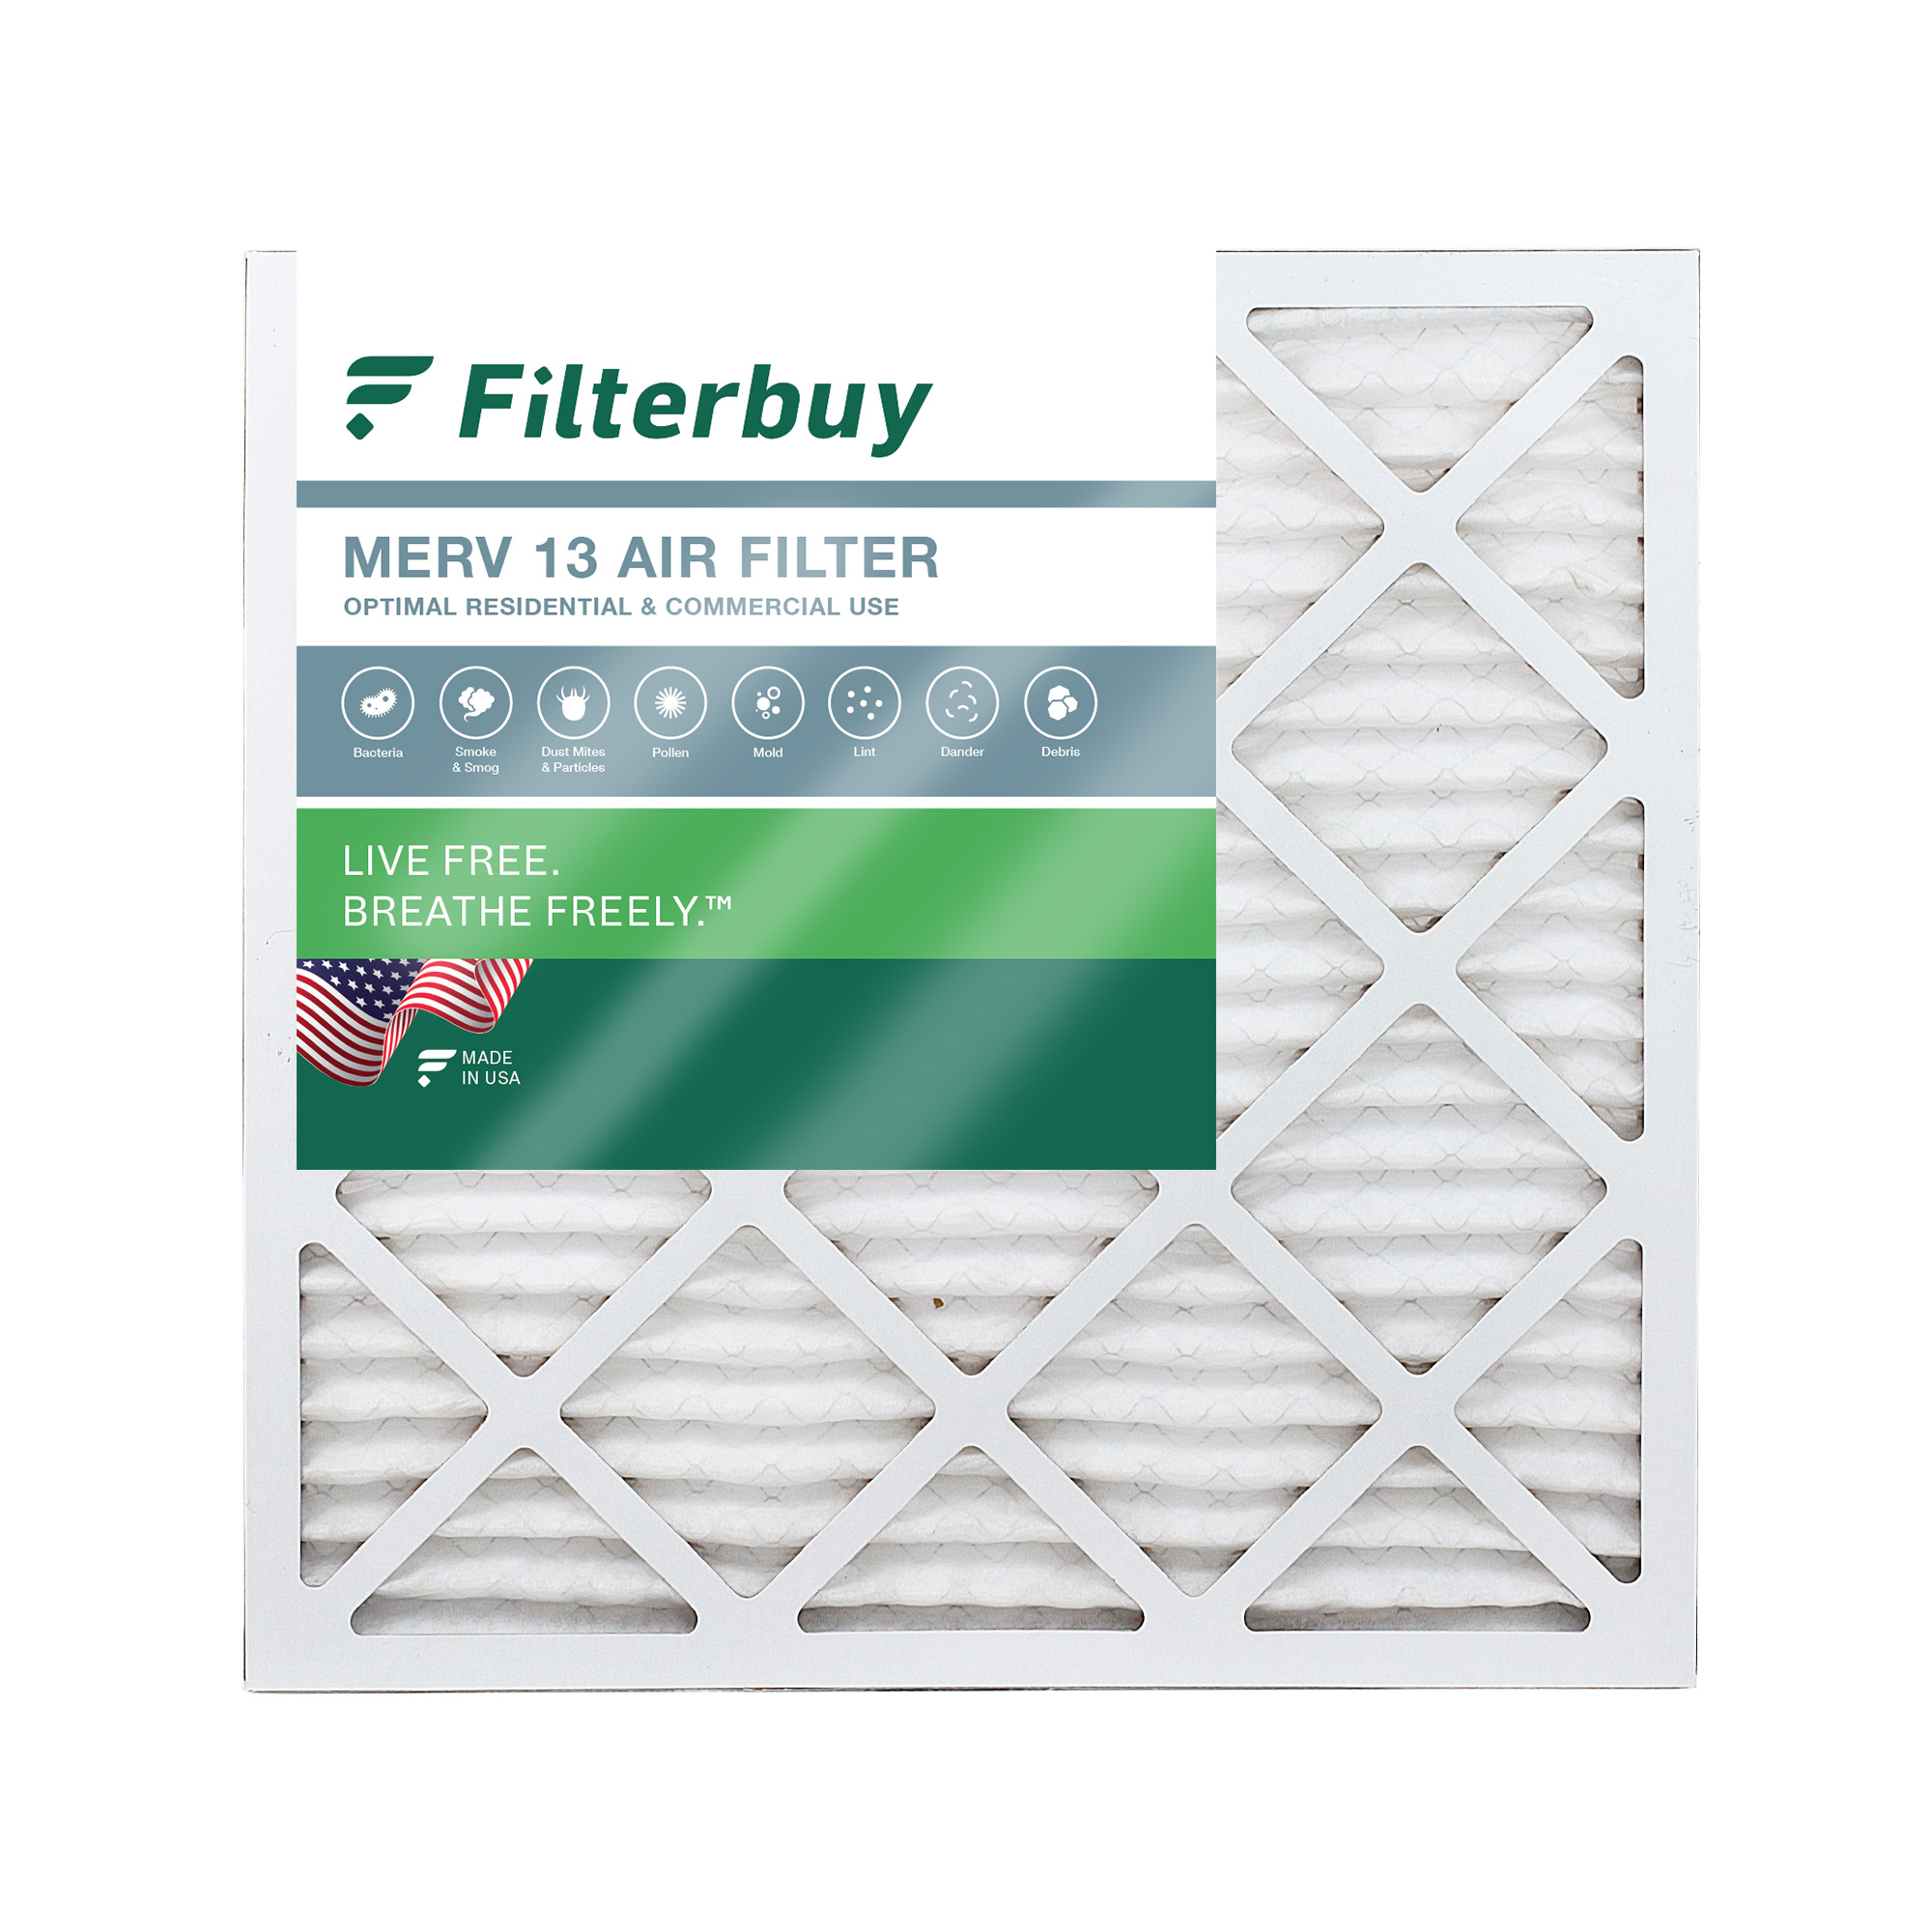 How does a MERV 13 air filter work - Filterbuy MERV 13 Filter